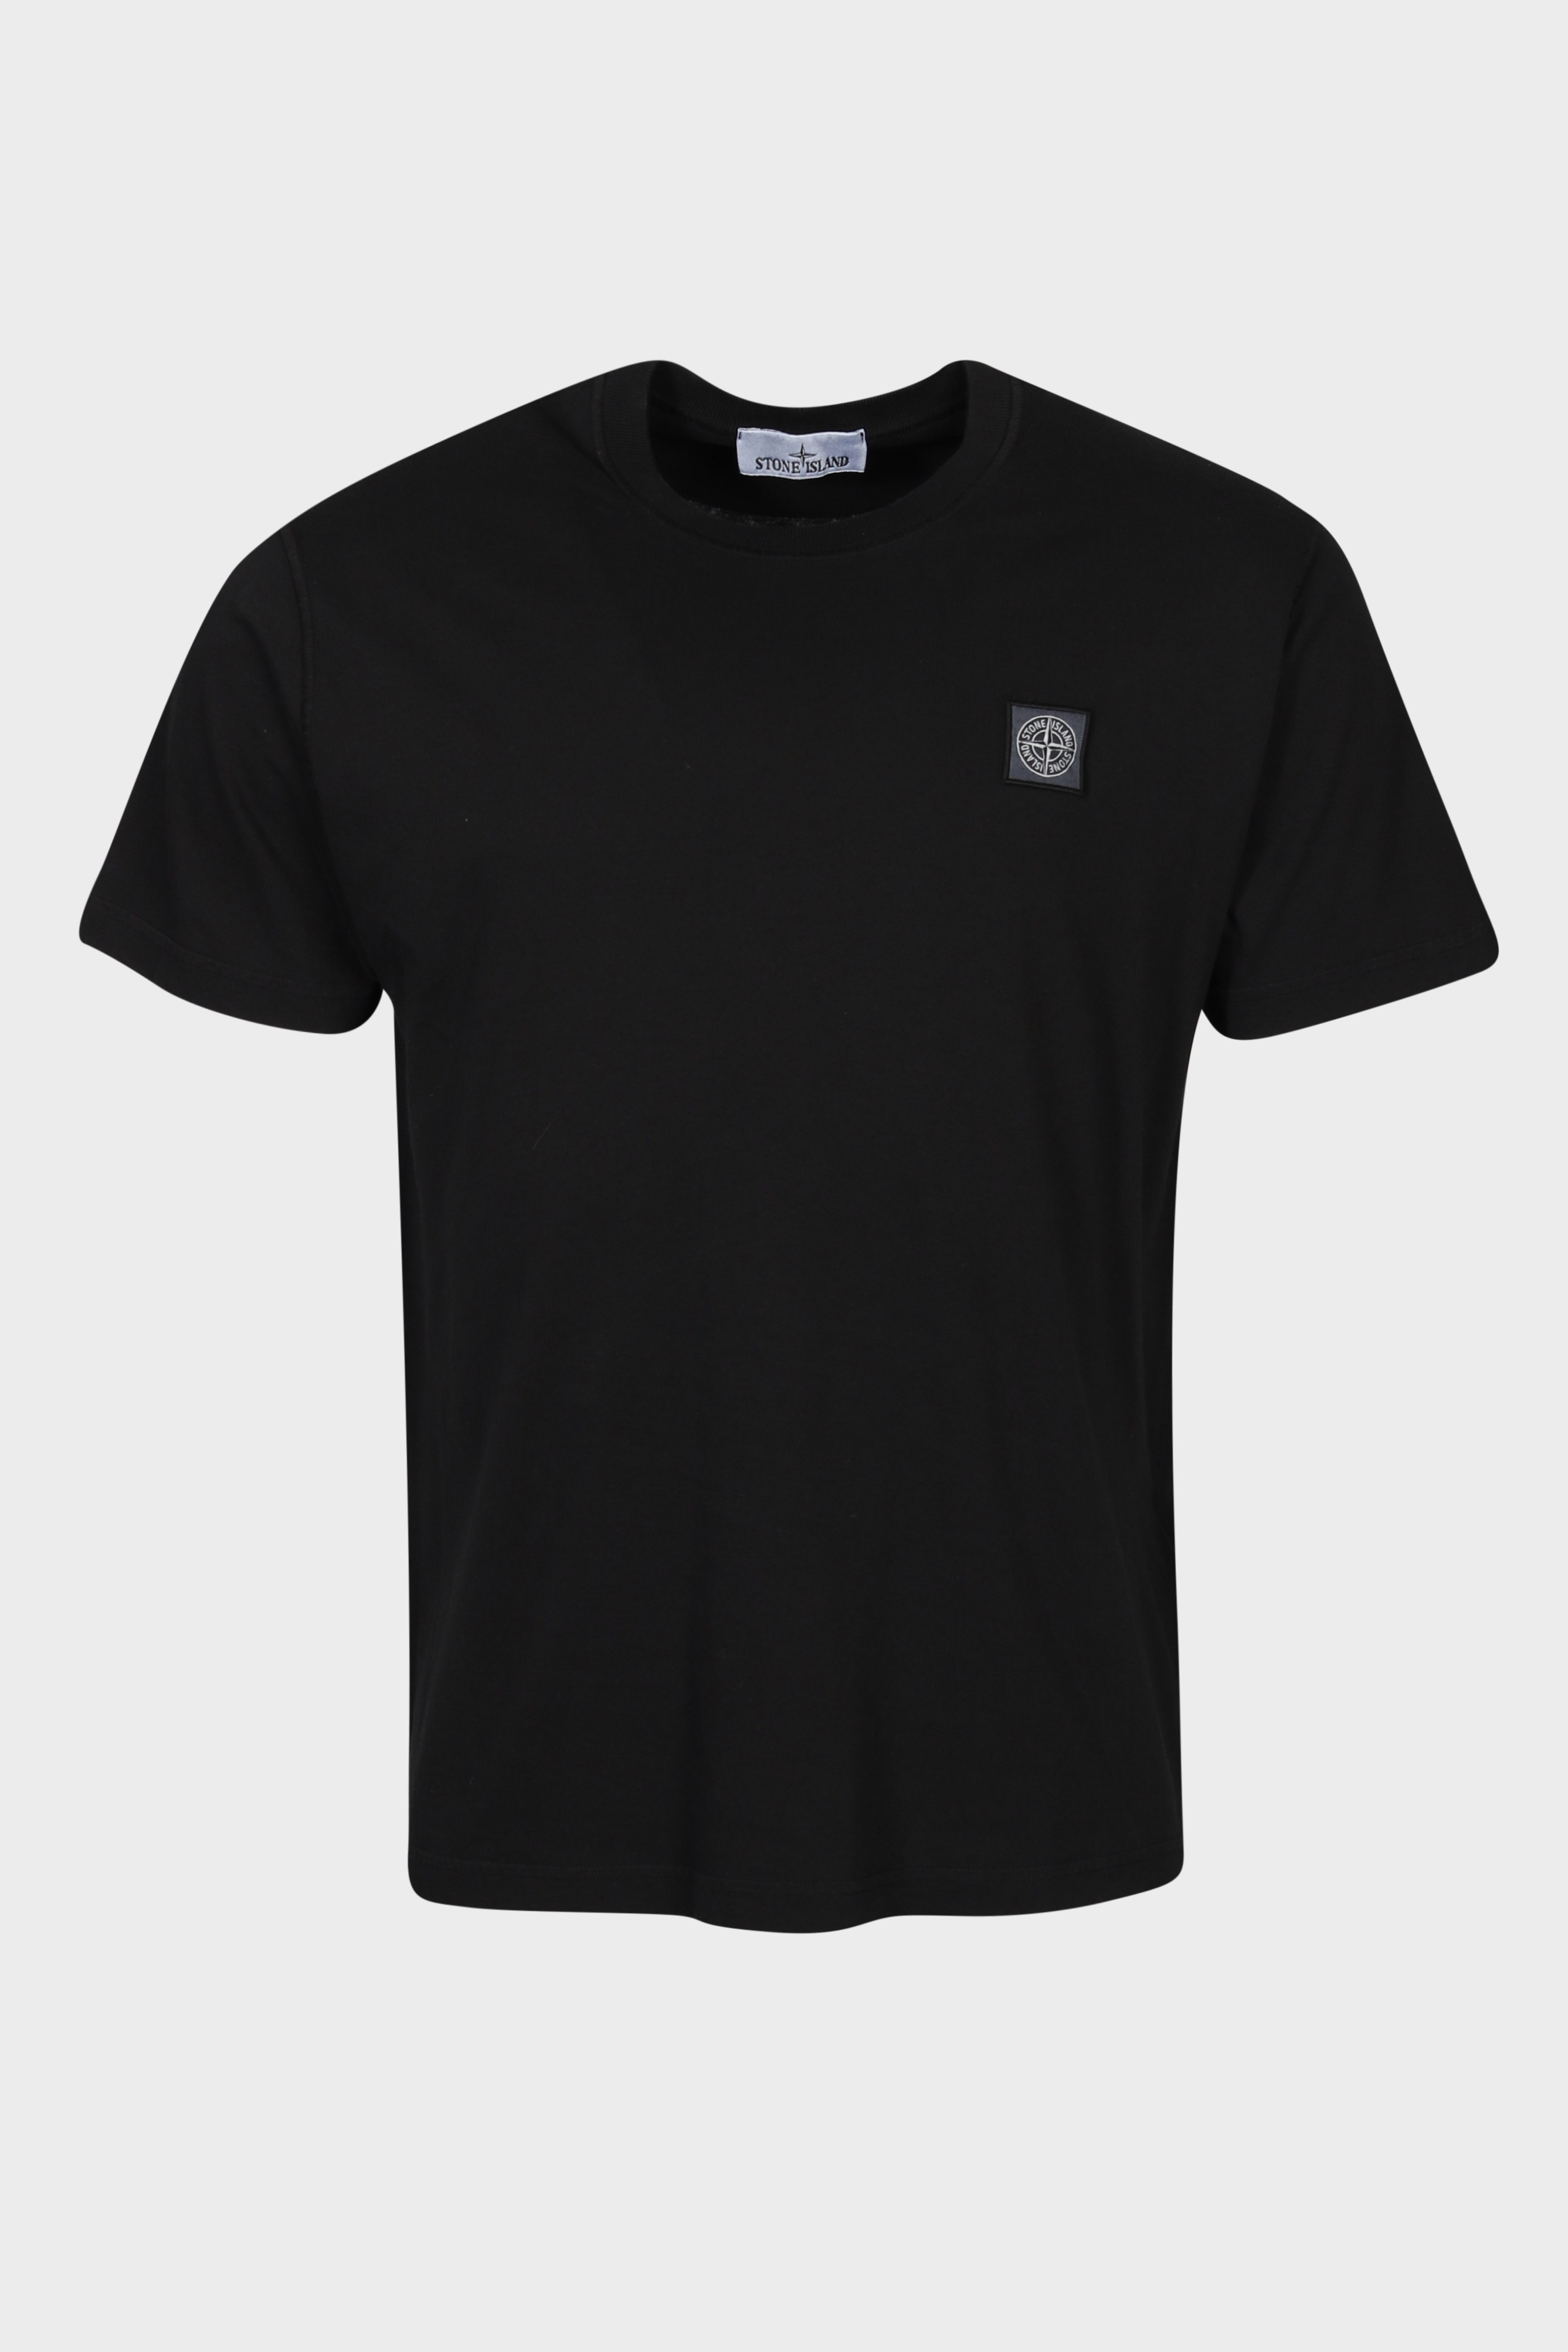 STONE ISLAND T-Shirt in Black